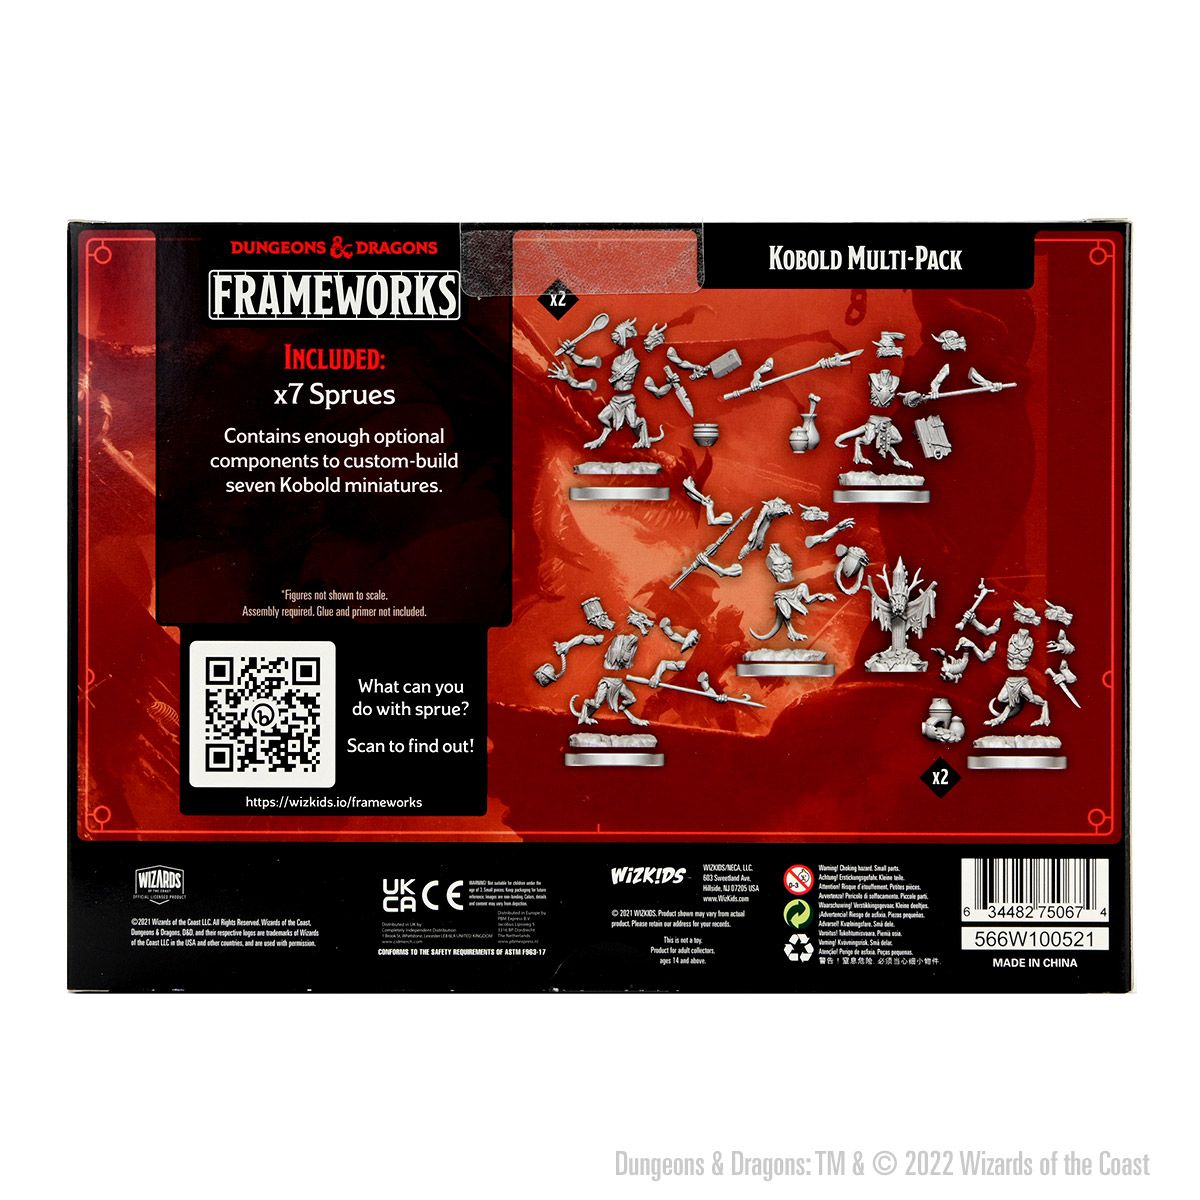 Dungeons & Dragons Frameworks: W01 Kobold Multi-Pack (7 Miniatures) - Bards & Cards